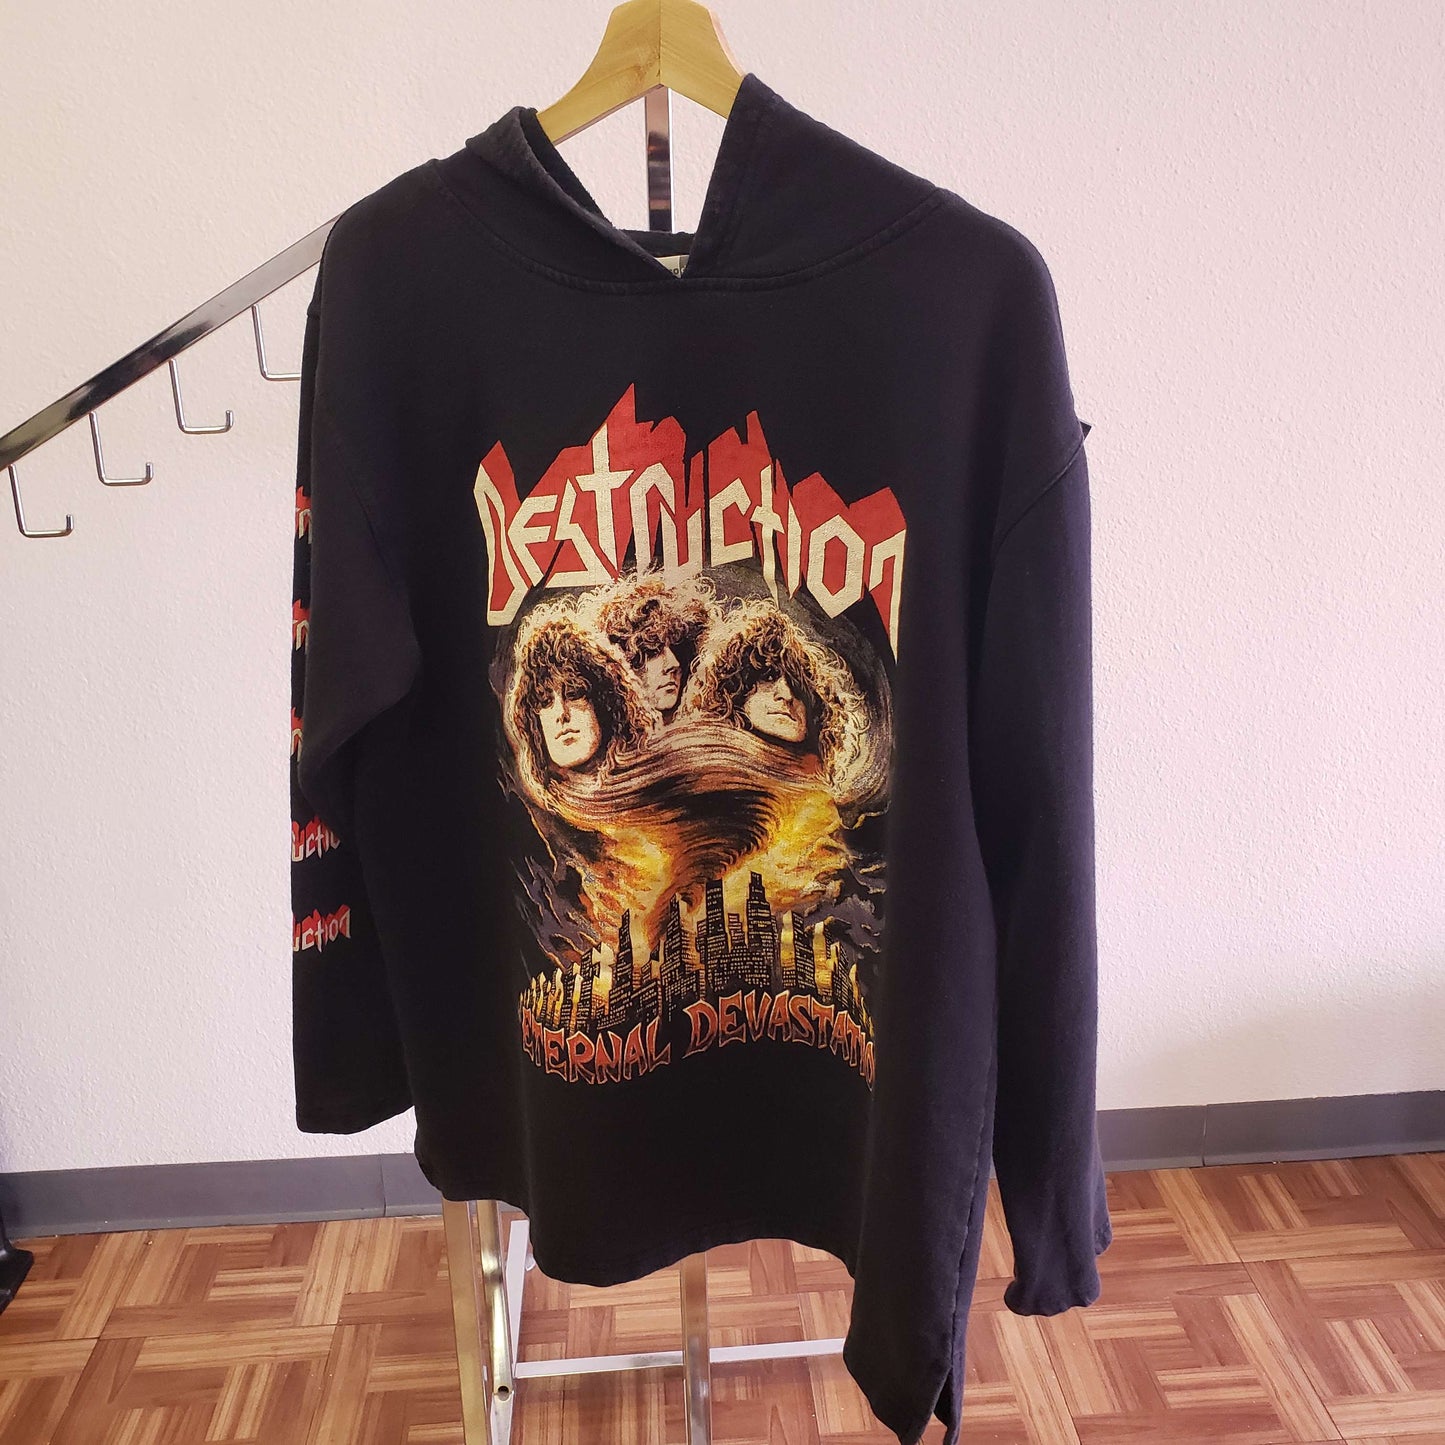 Destruction - Eternal Devastation vintage hooded sweatshirt